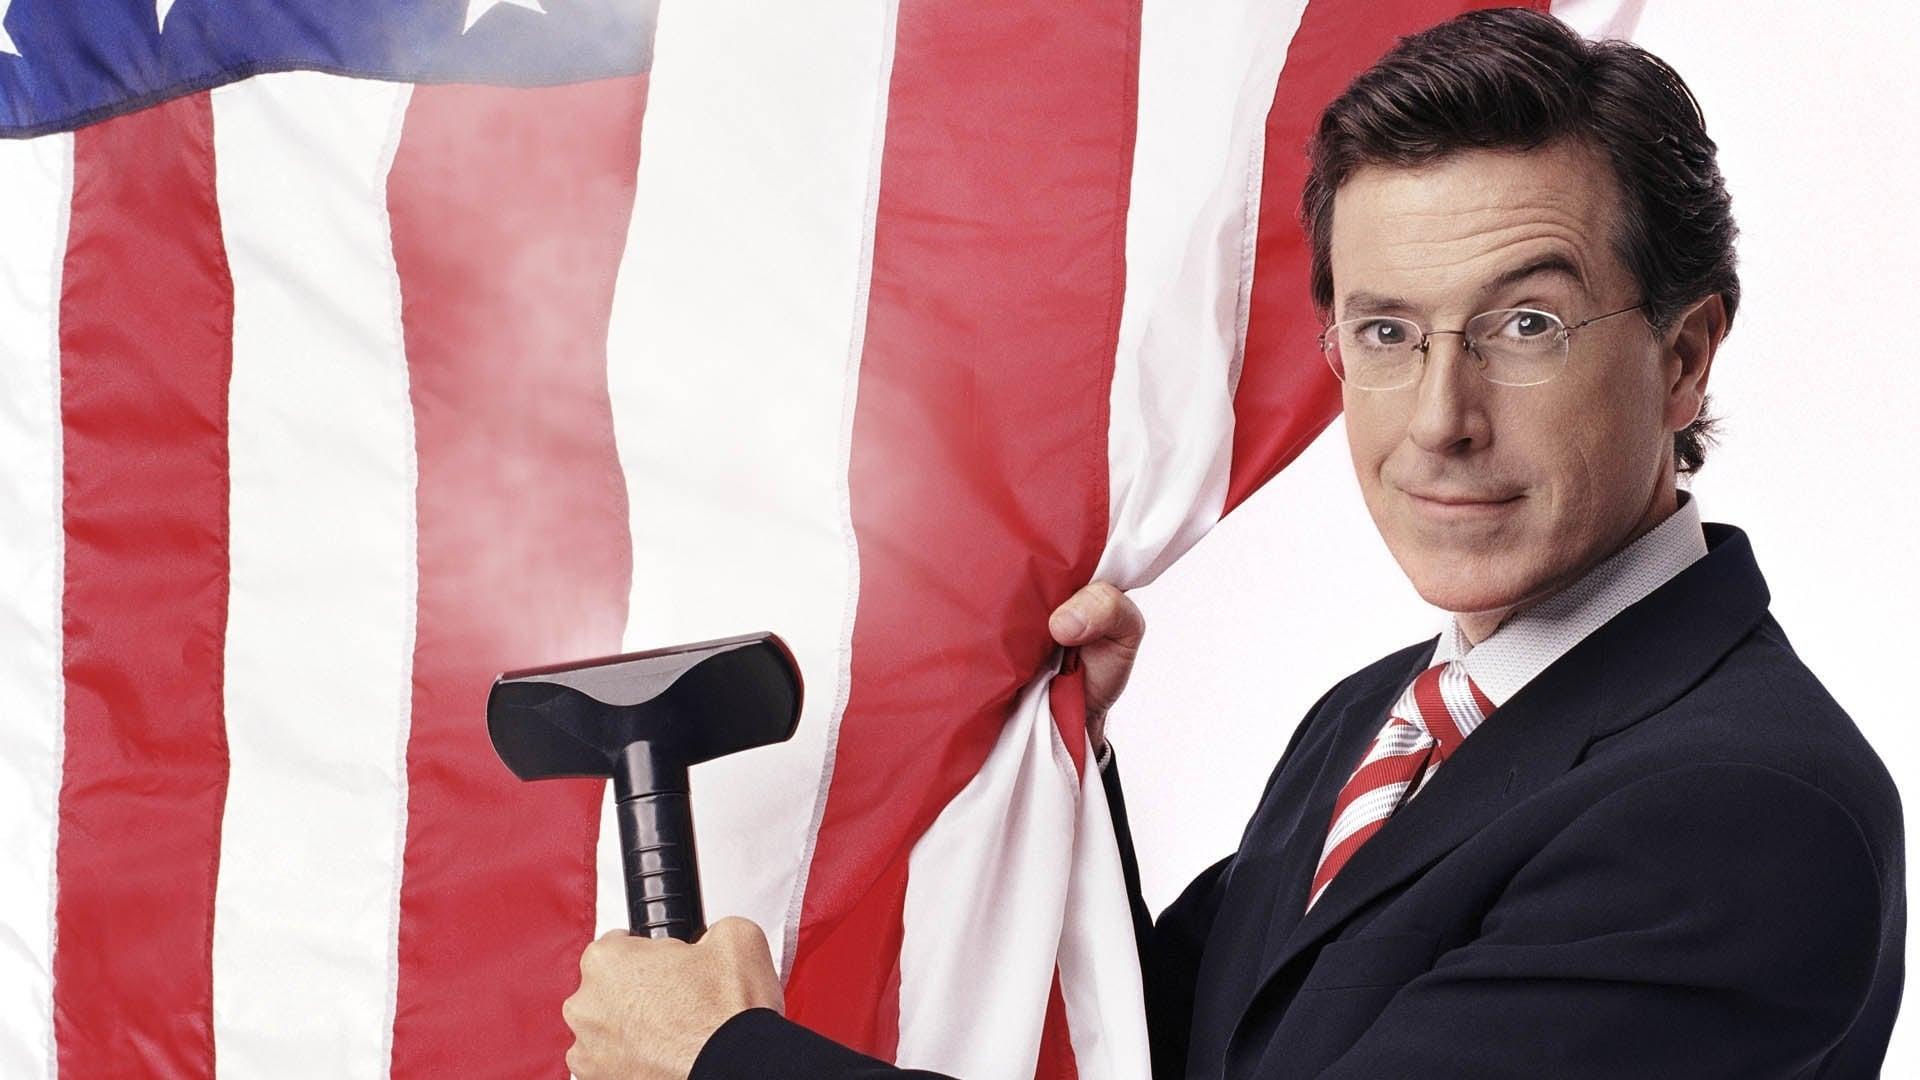 The Colbert Report backdrop